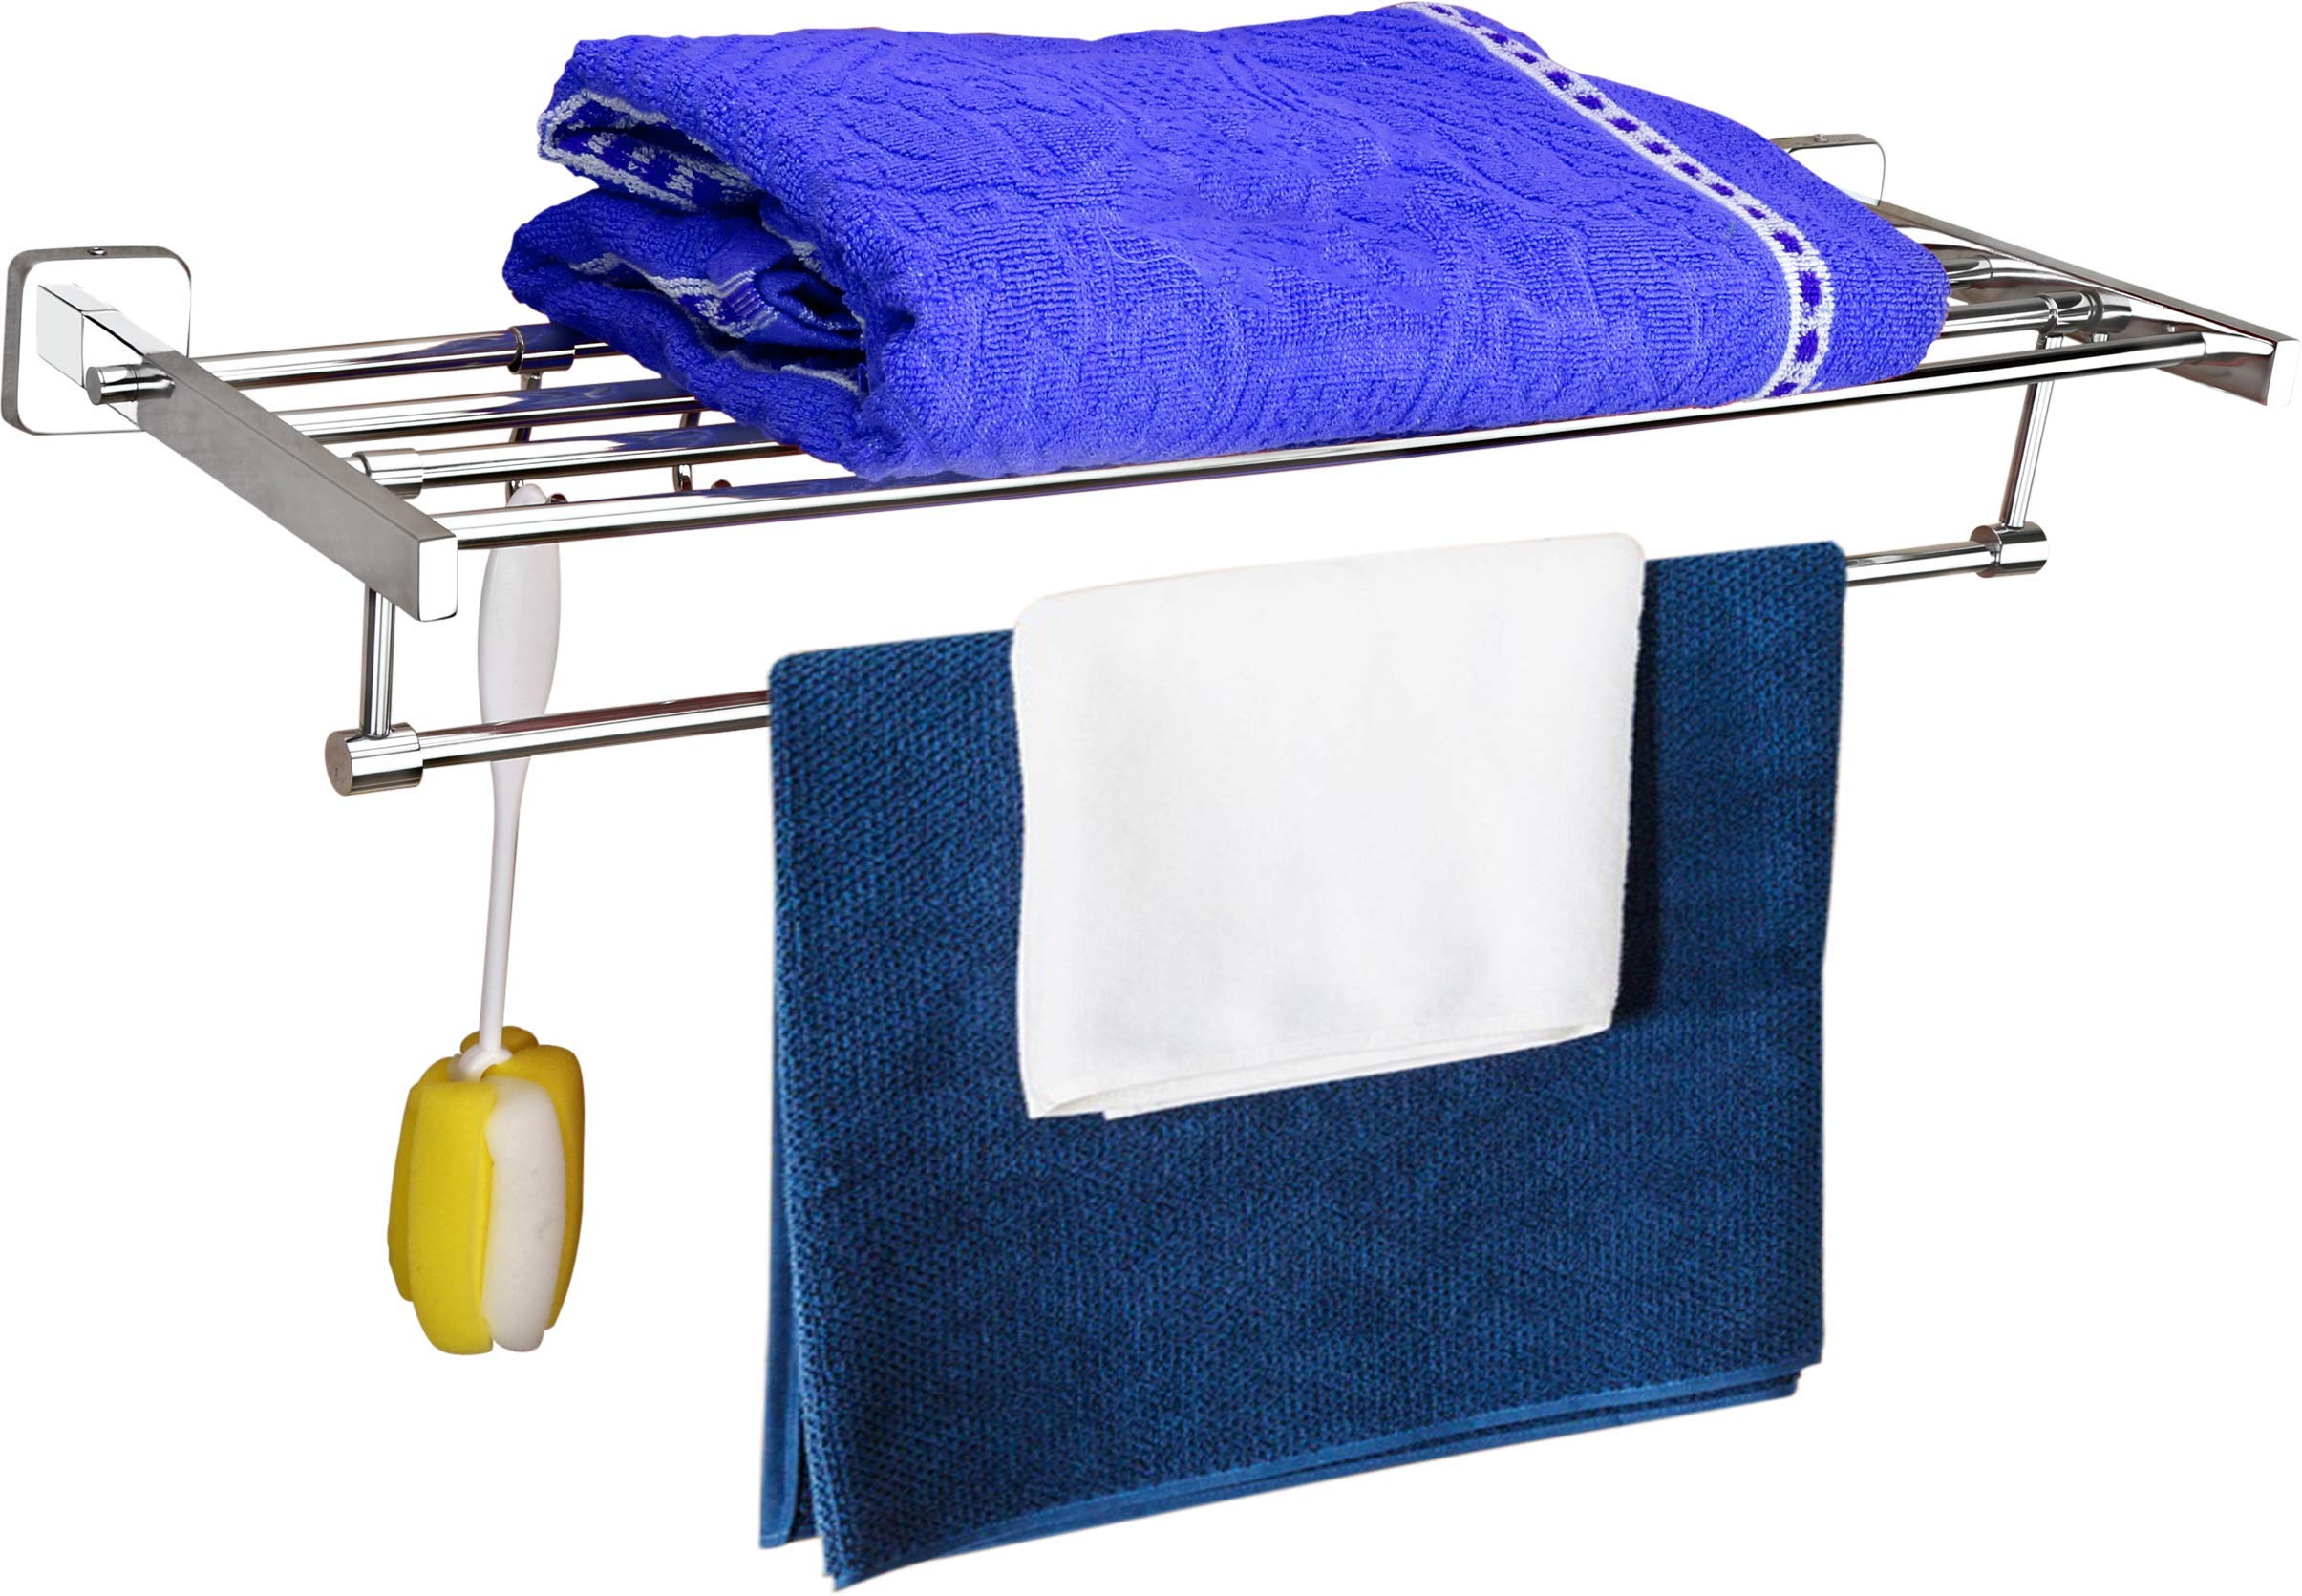 Plantex Nexa Stainless Steel Towel Rack for Bathroom/Towel Stand/Towel Hanger/Bathroom Accessories (24 Inch-Chrome) - Pack of 1